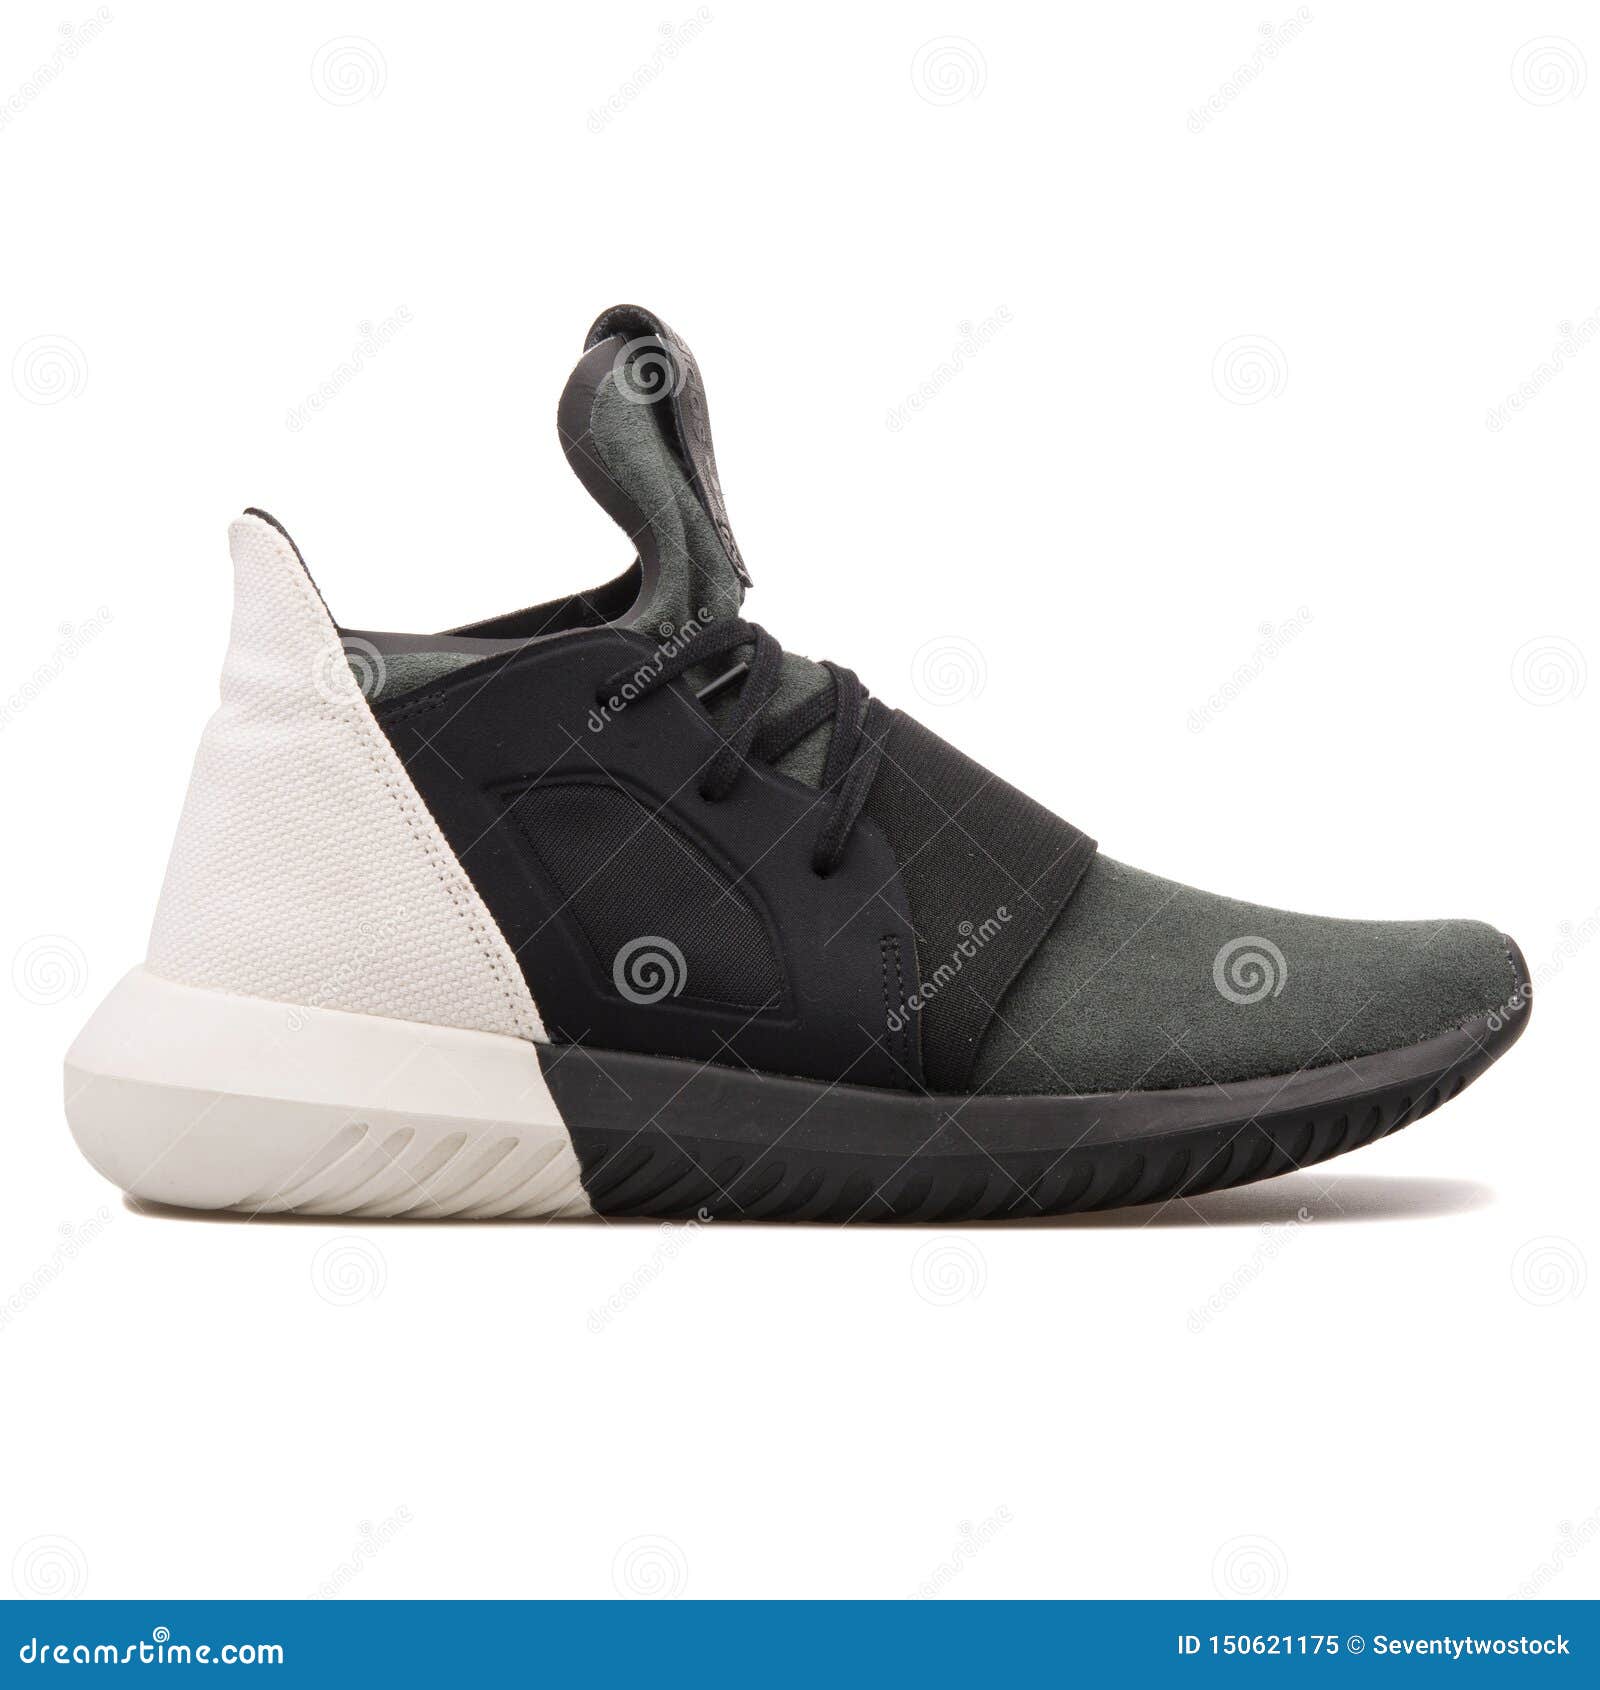 Adidas Tubular Defiant Black and White Sneaker Editorial Image - Image ...